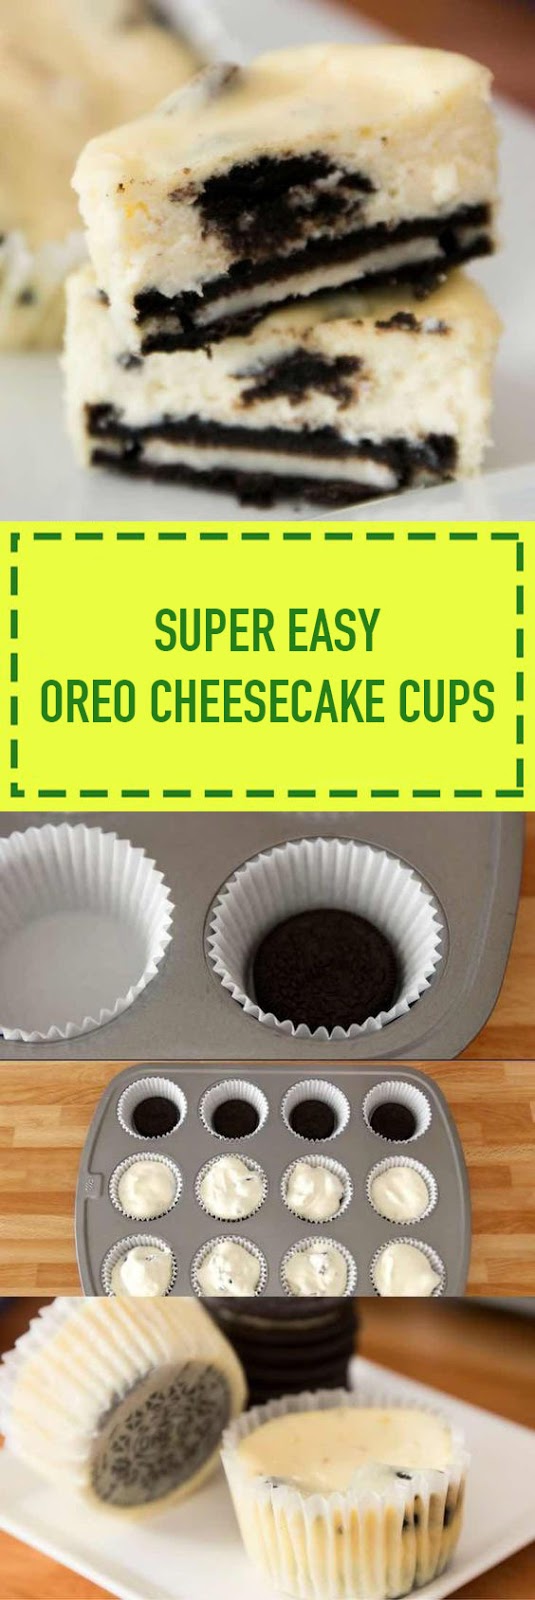 Super Easy Oreo Cheesecake Cups